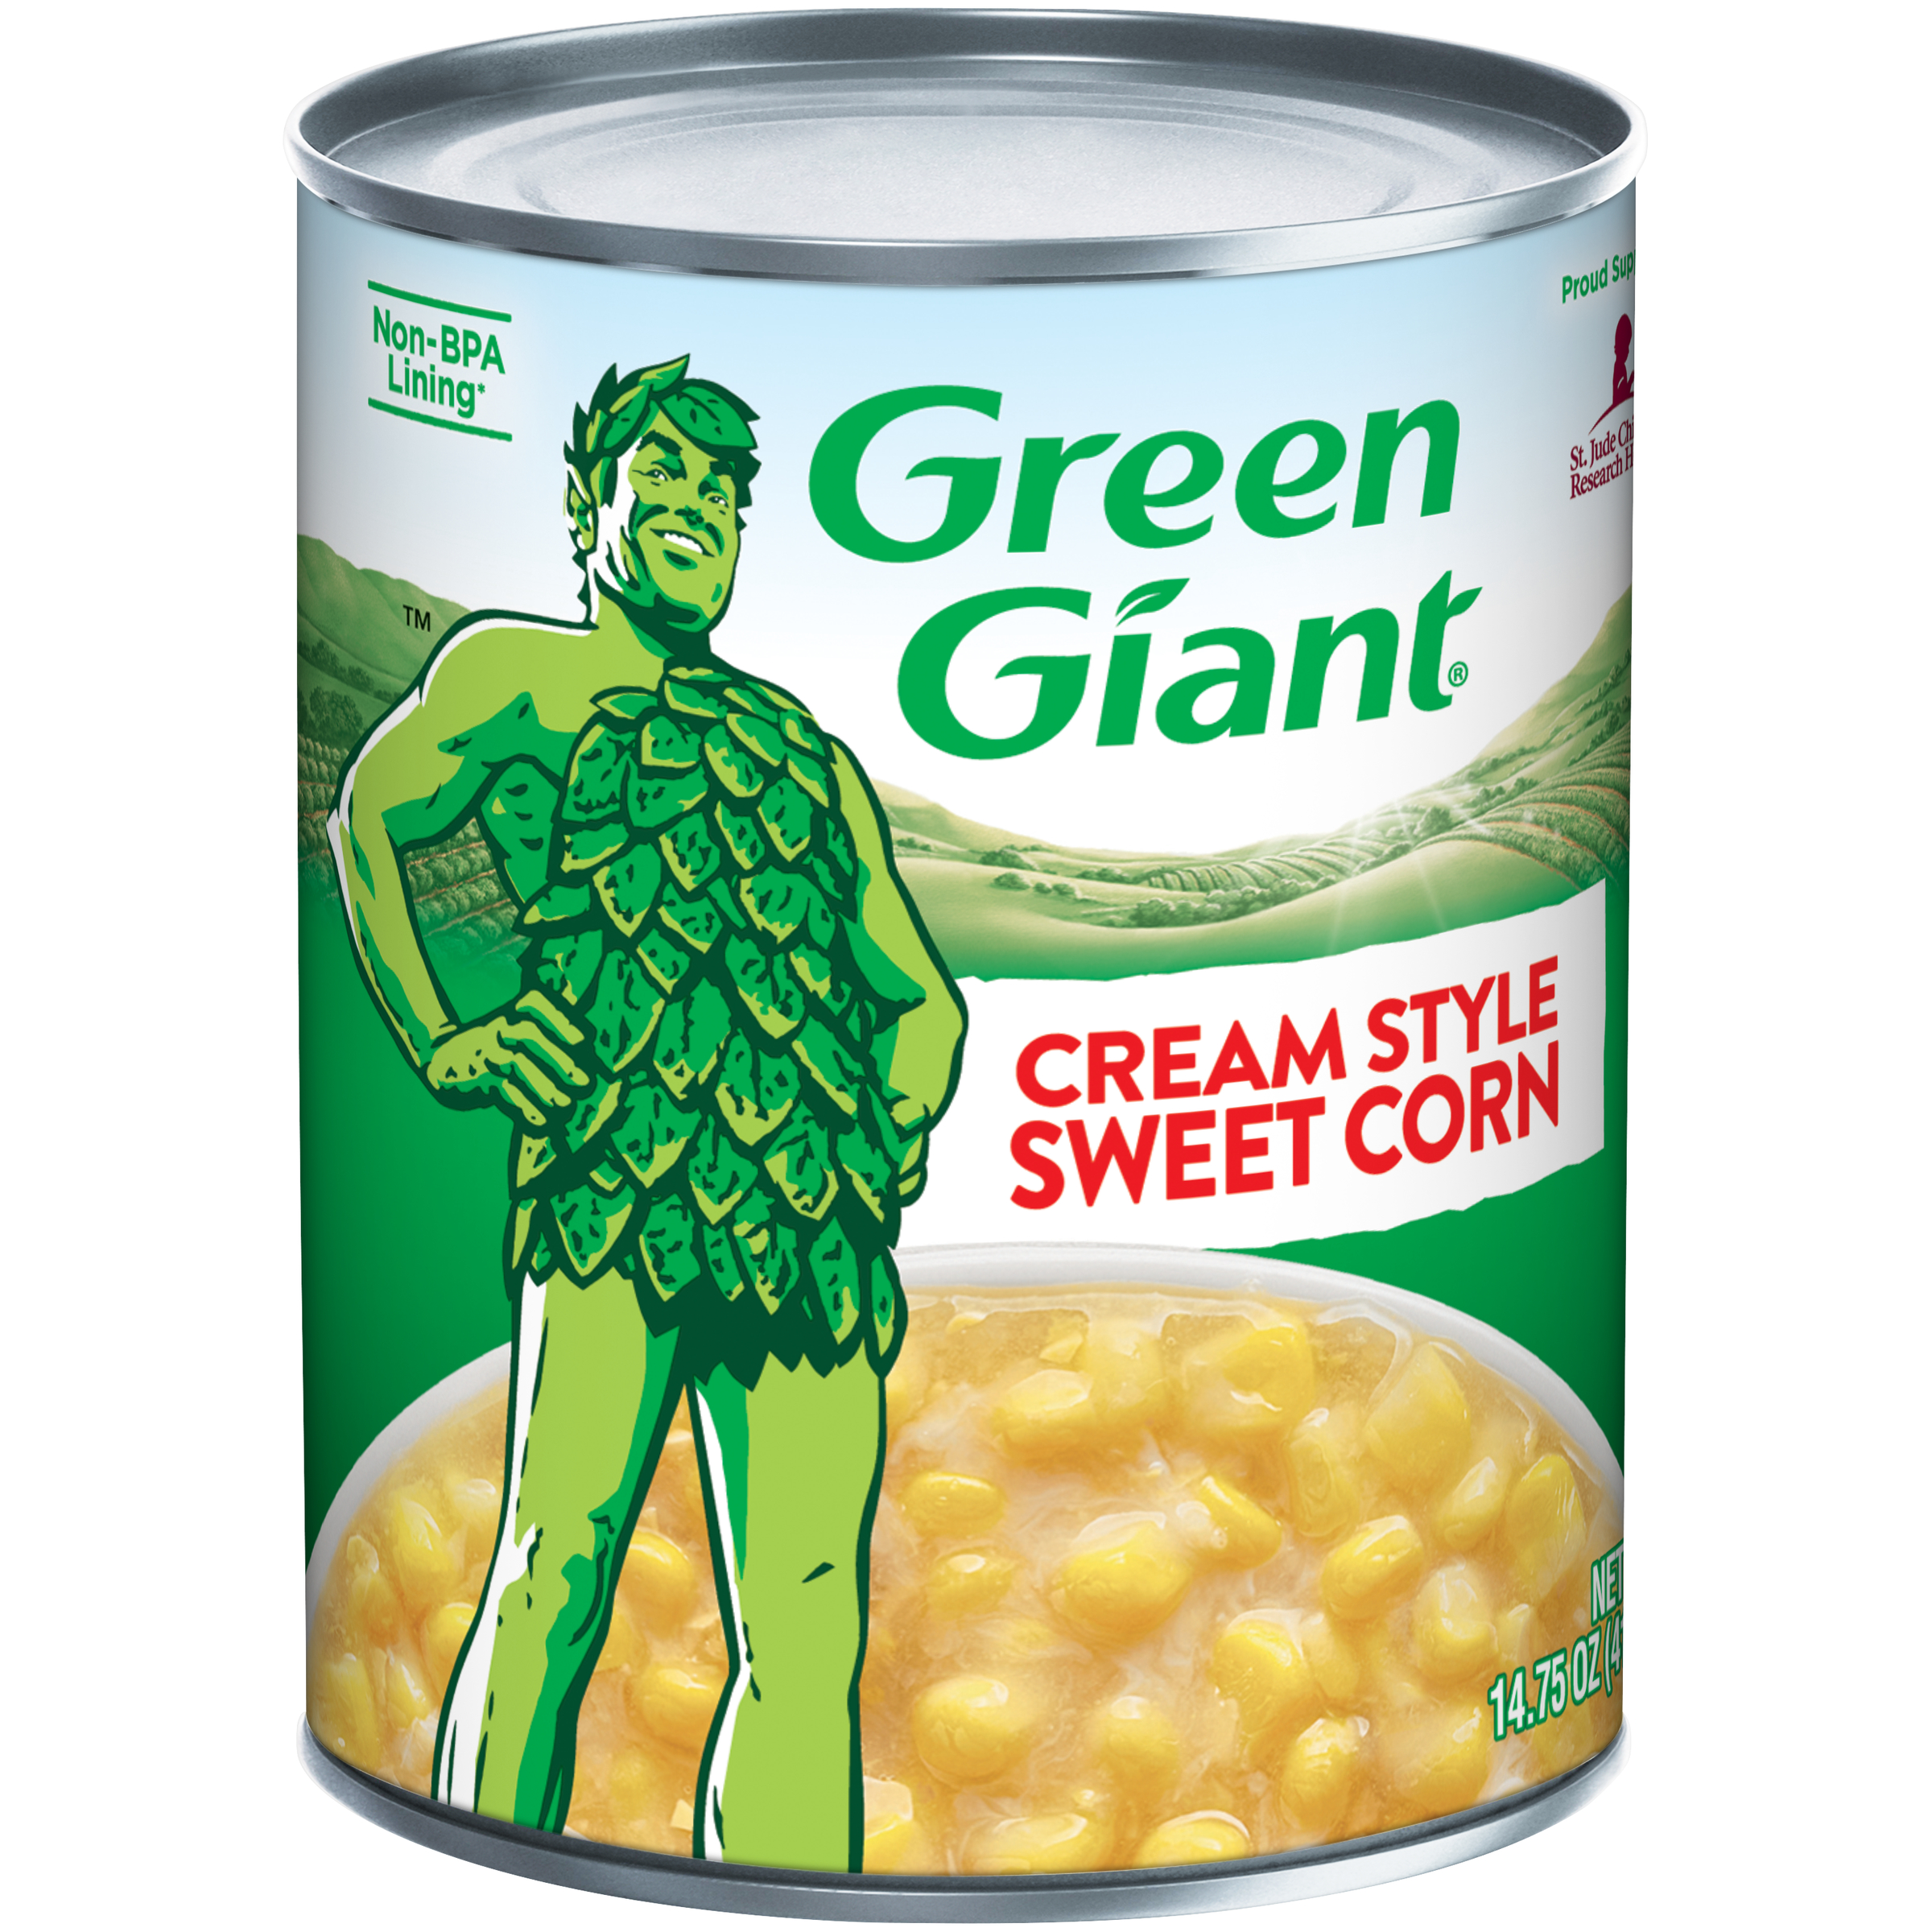 Green Giant Cream Style Sweet Corn 14.75 oz Can